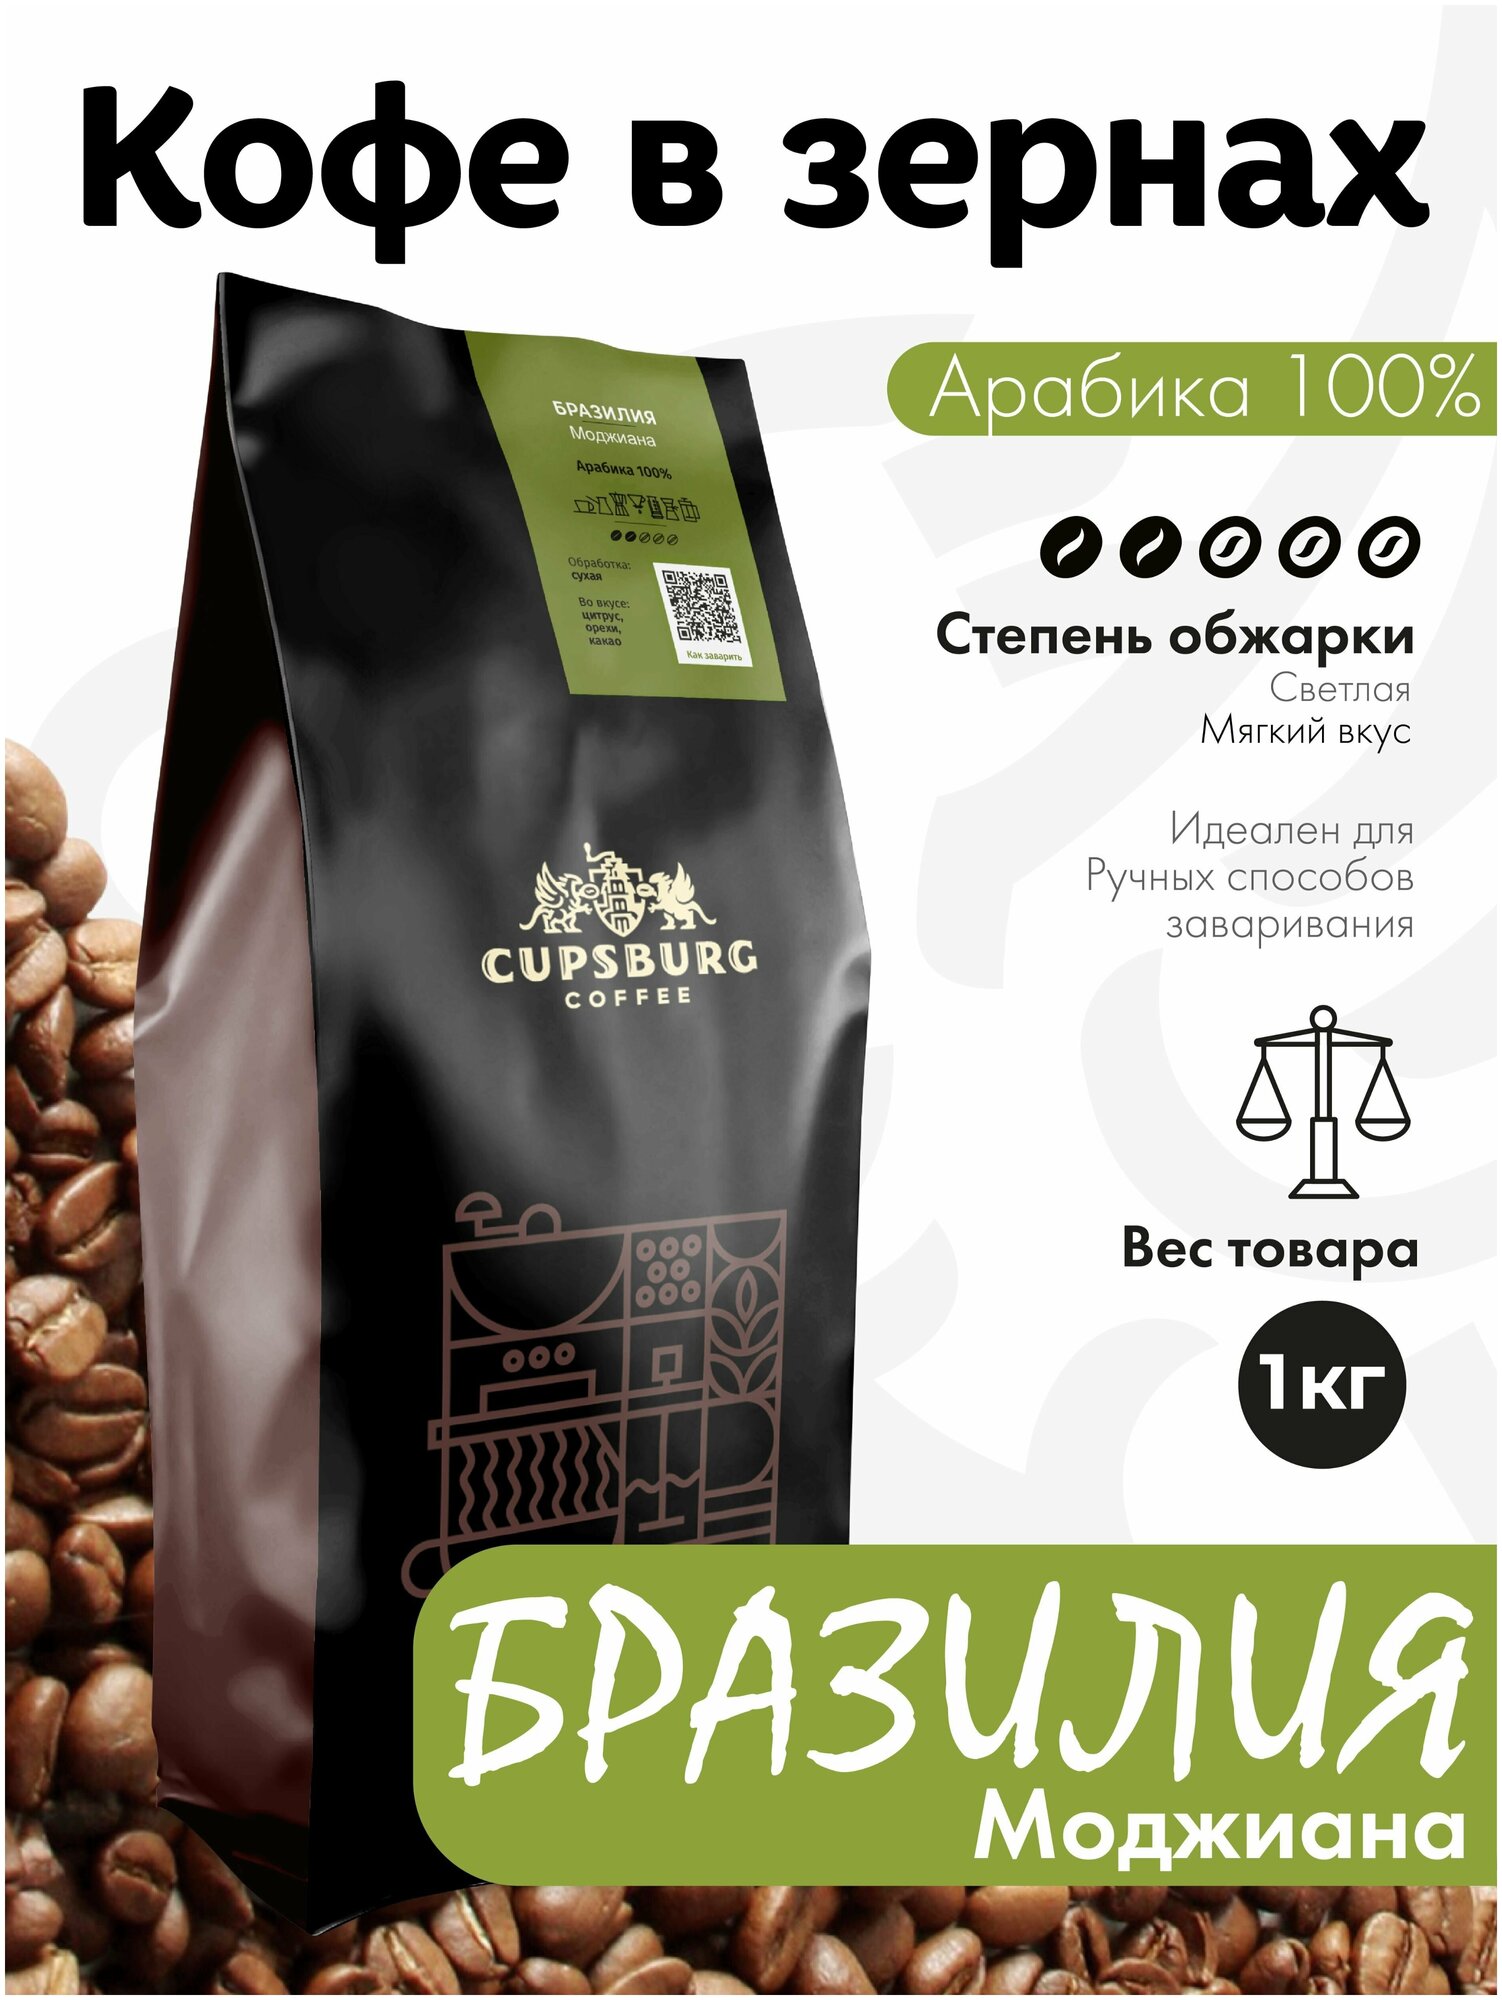 Кофе в зернах 1кг (светлая обжарка) бразилия моджиана, Арабика 100%, капсбург